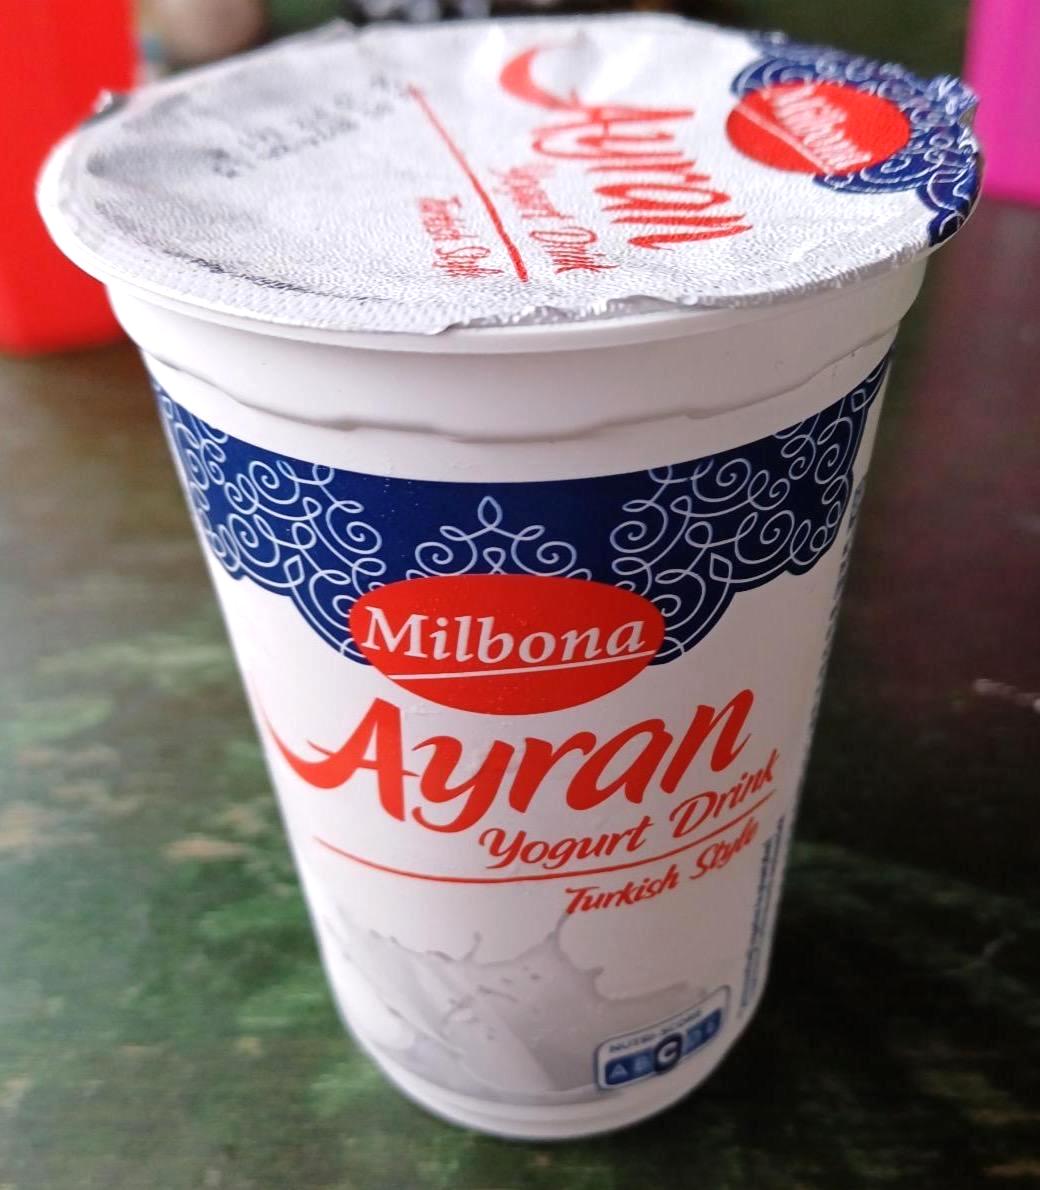 Képek - Ayran Yogurt Drink Milbona